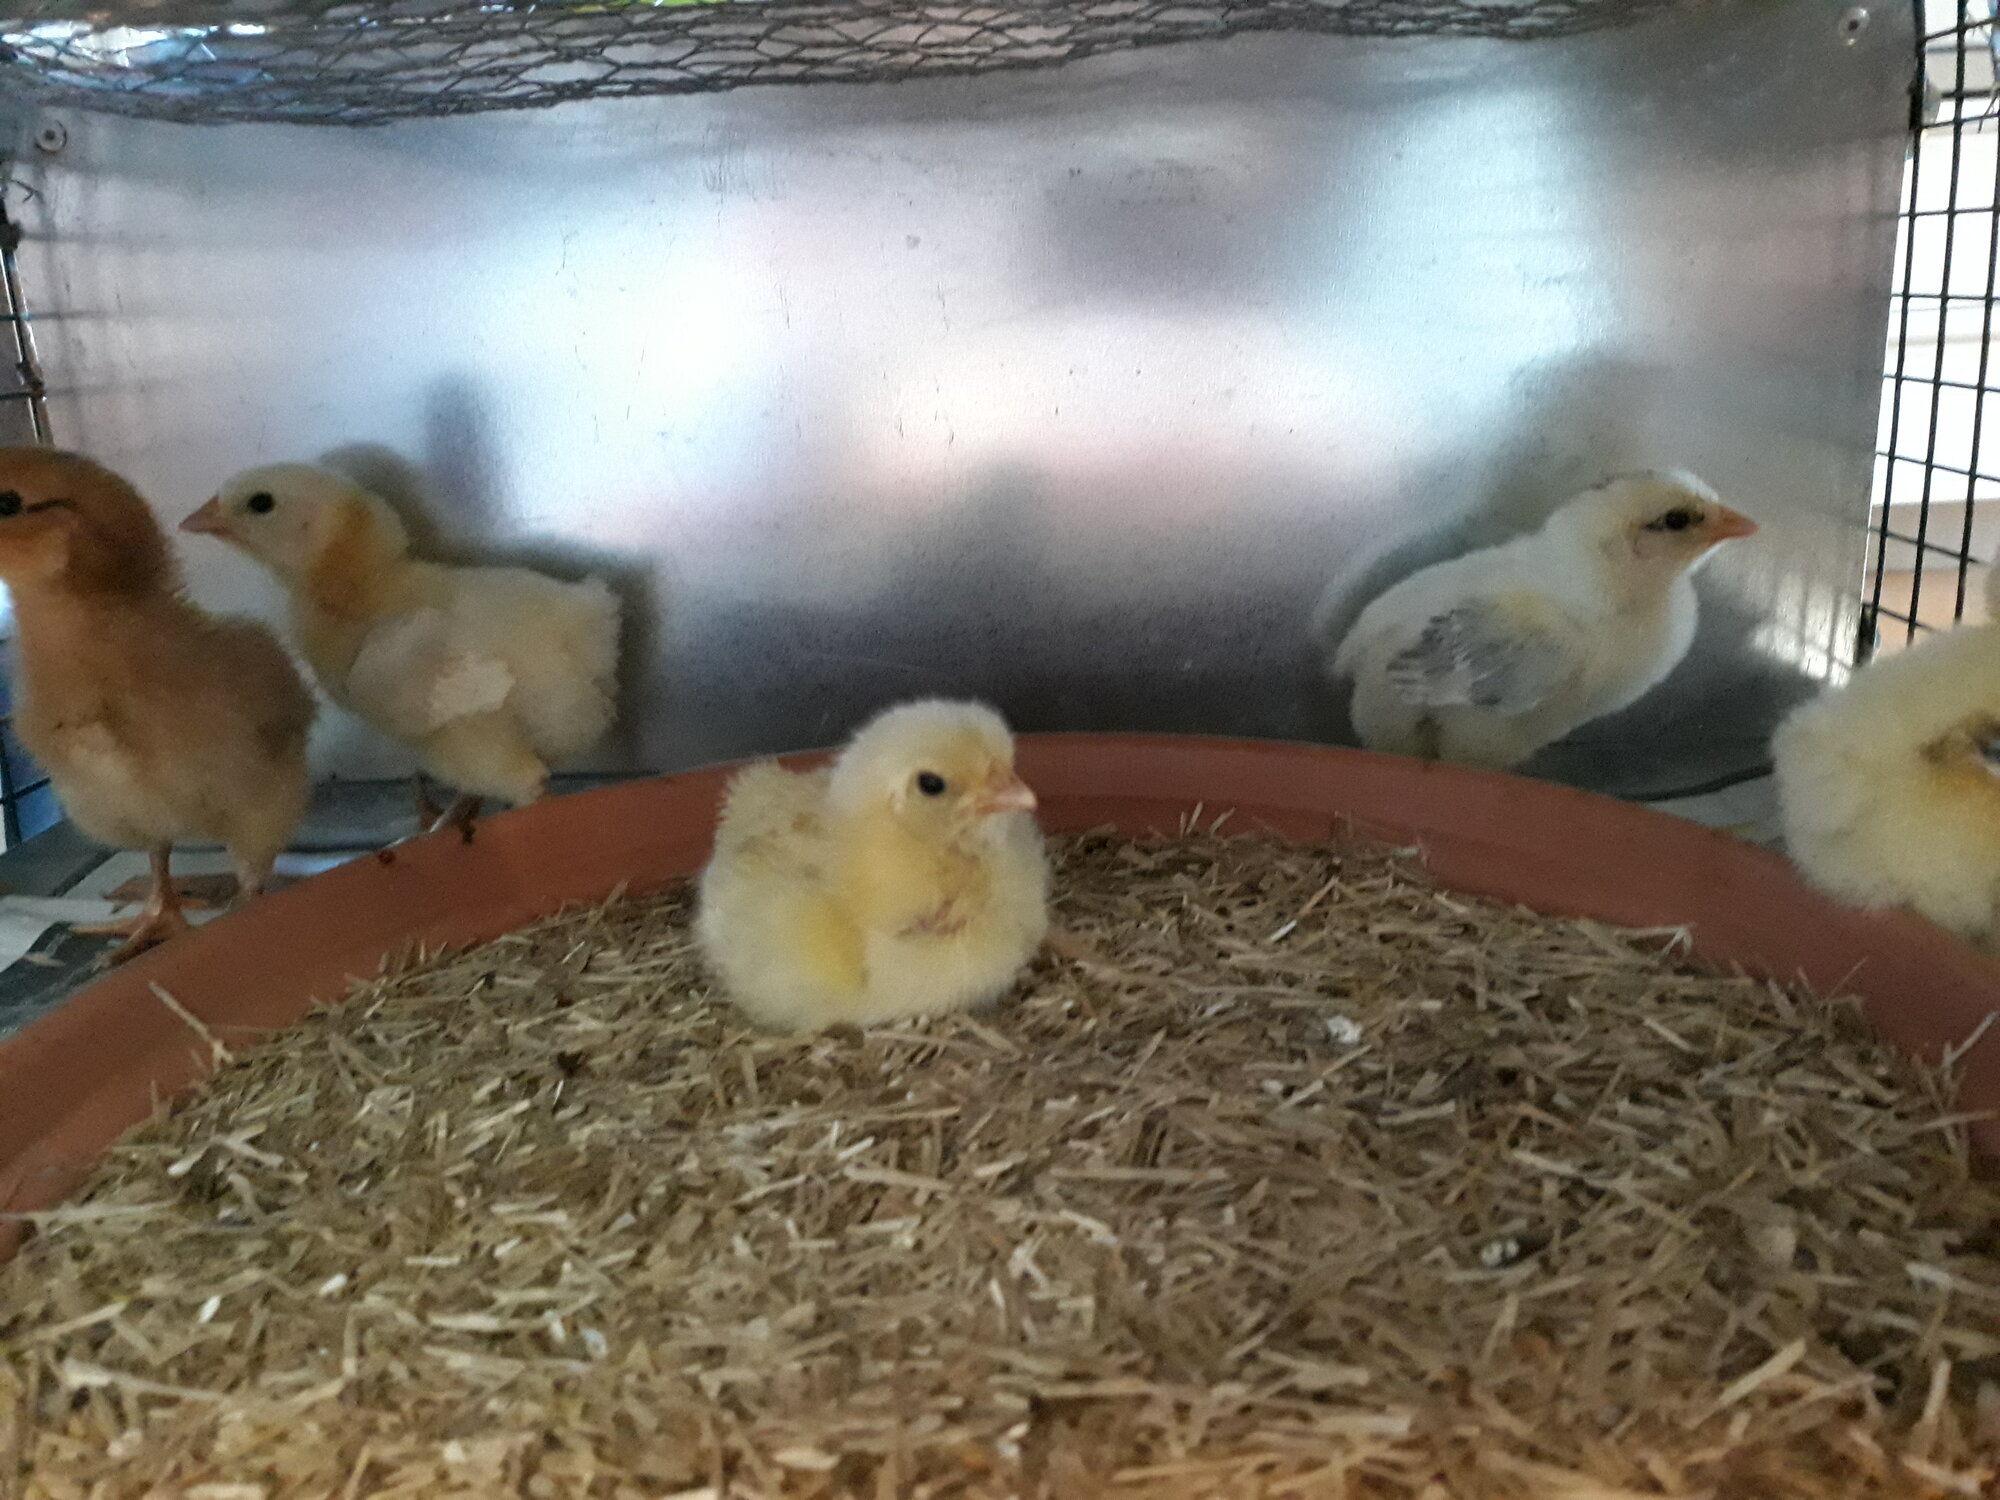 More chicks